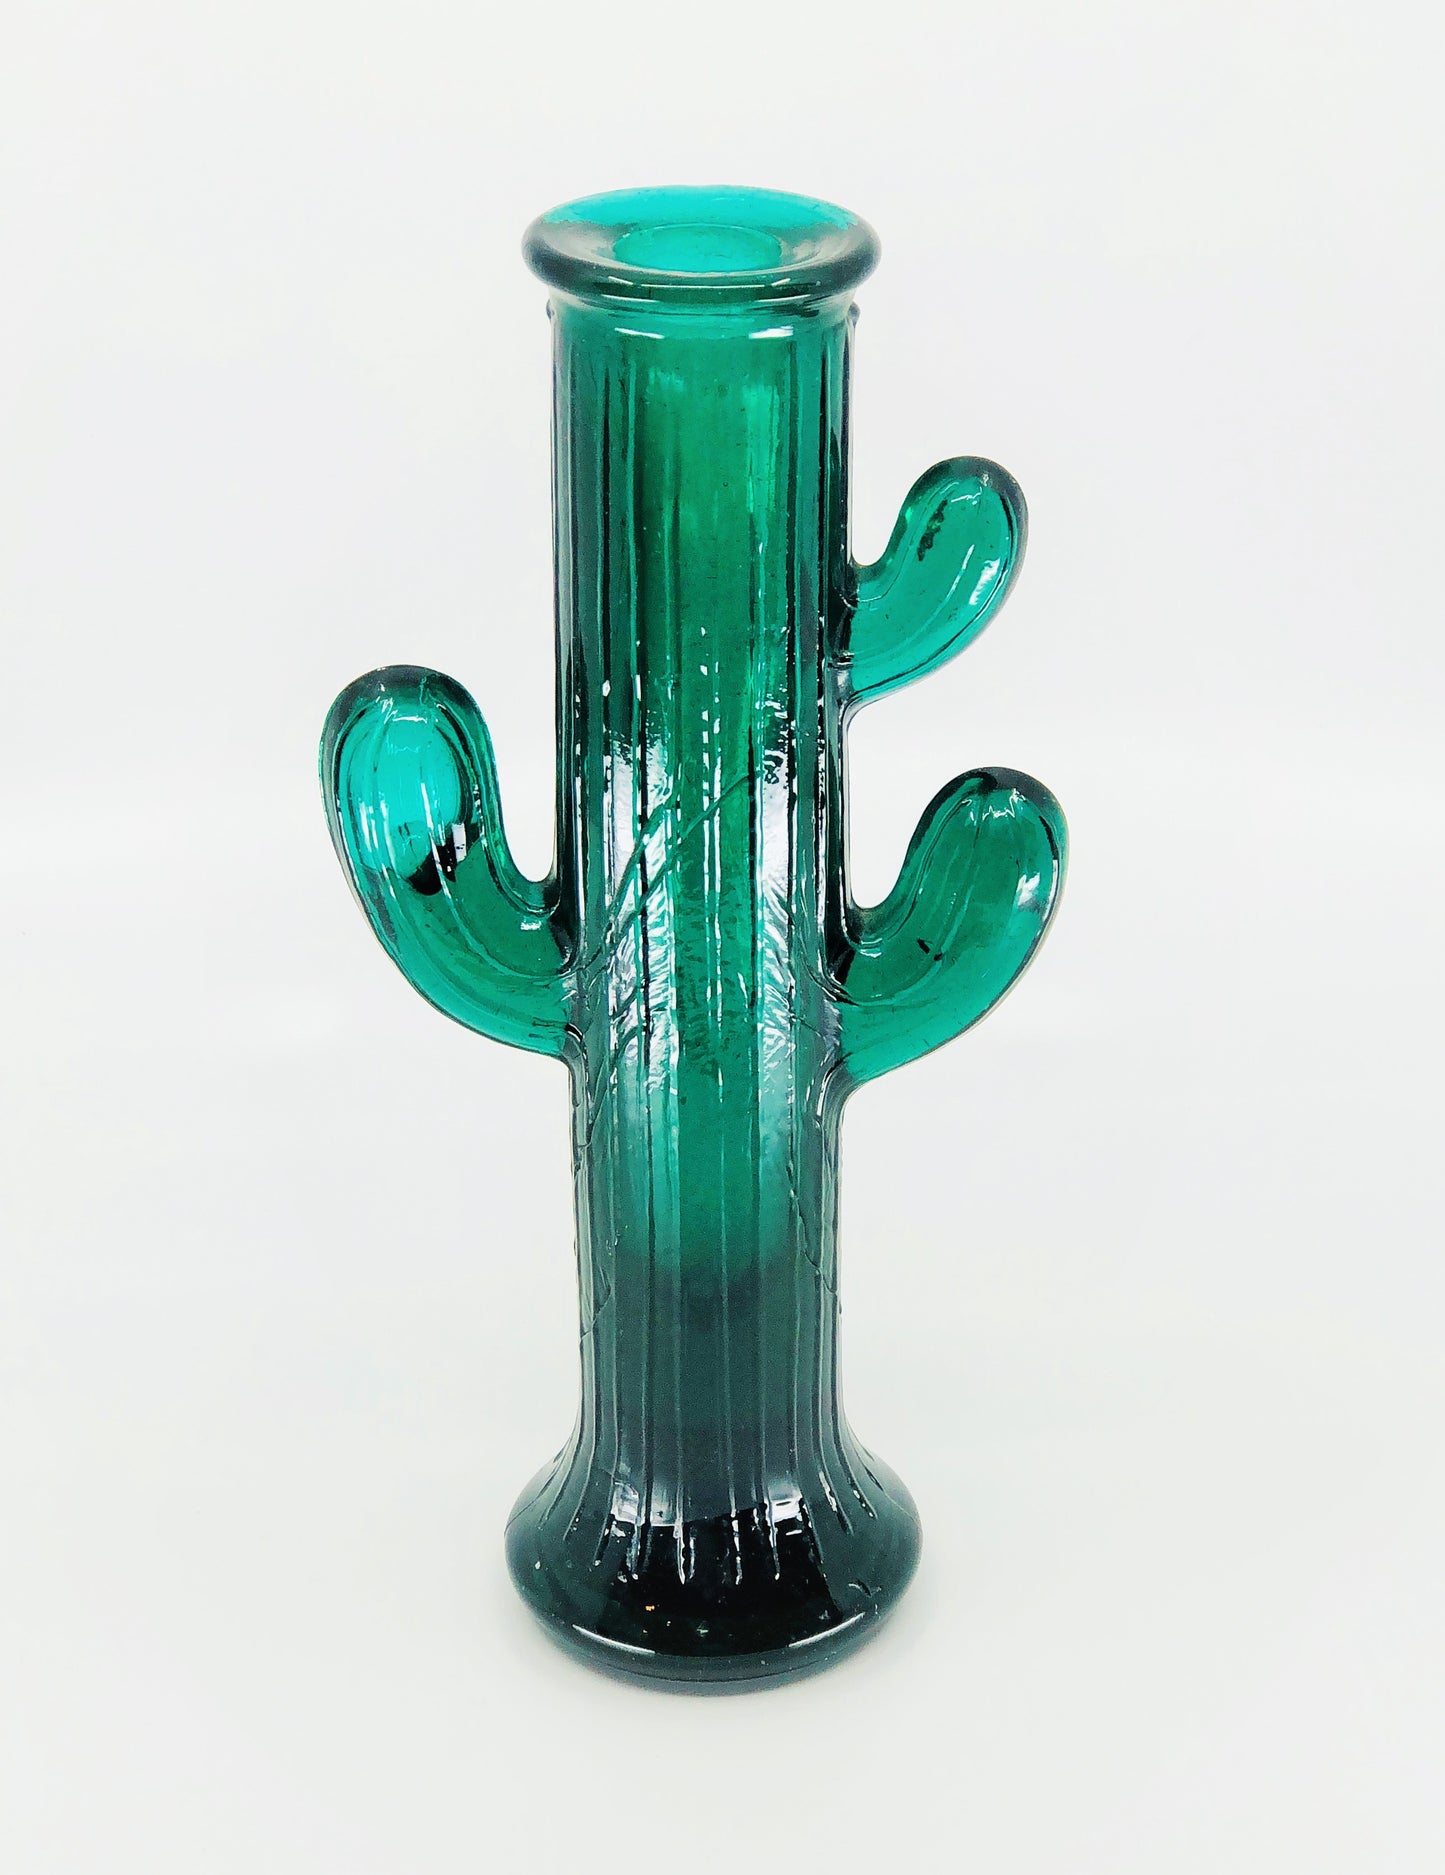 Saguaro Green Glass Cactus Candle Holder